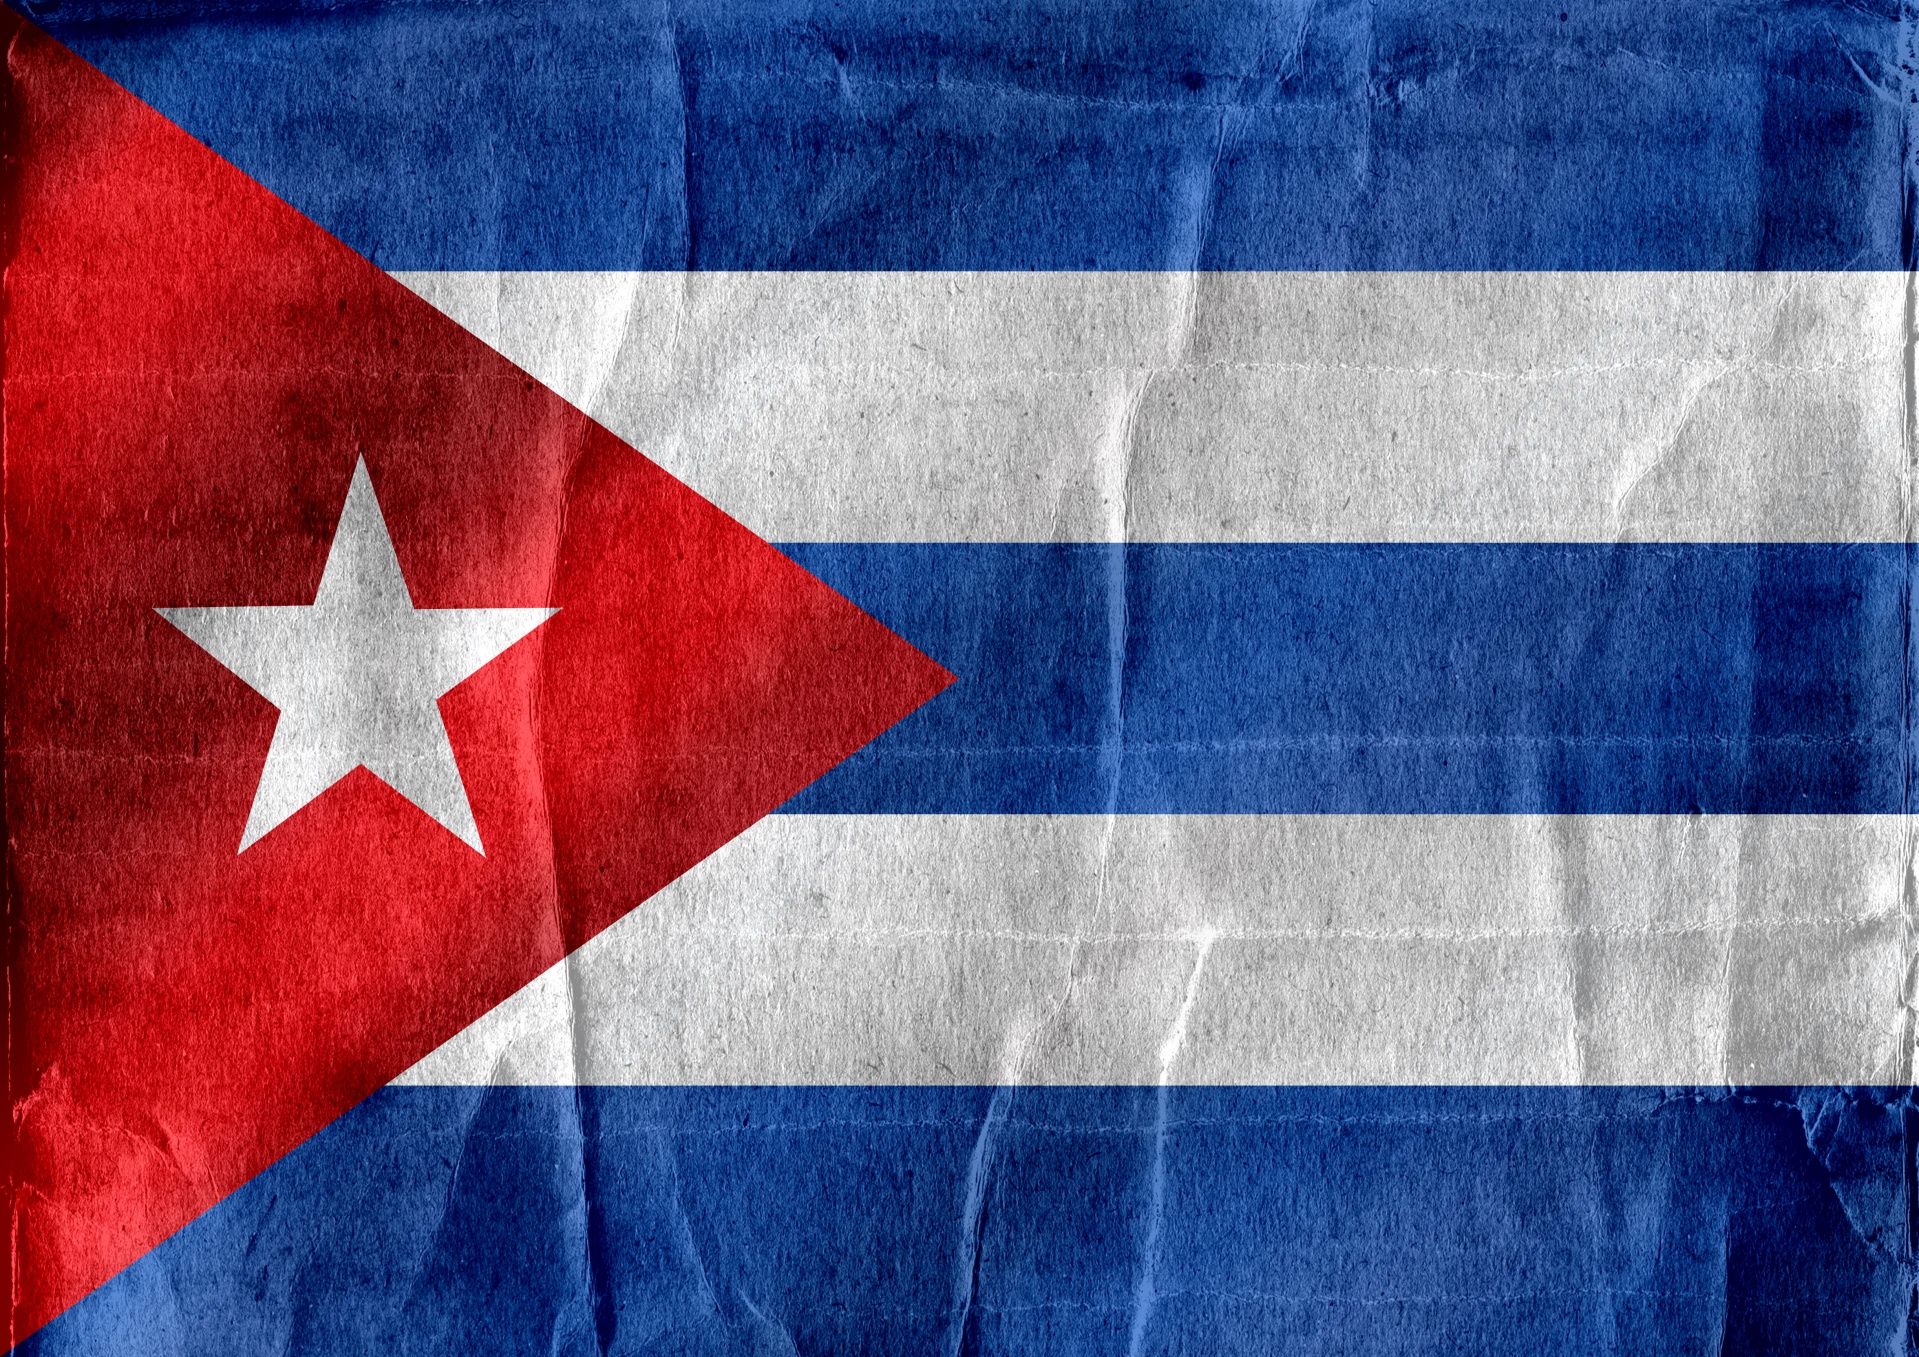 Cuba Flag Themes Idea Design